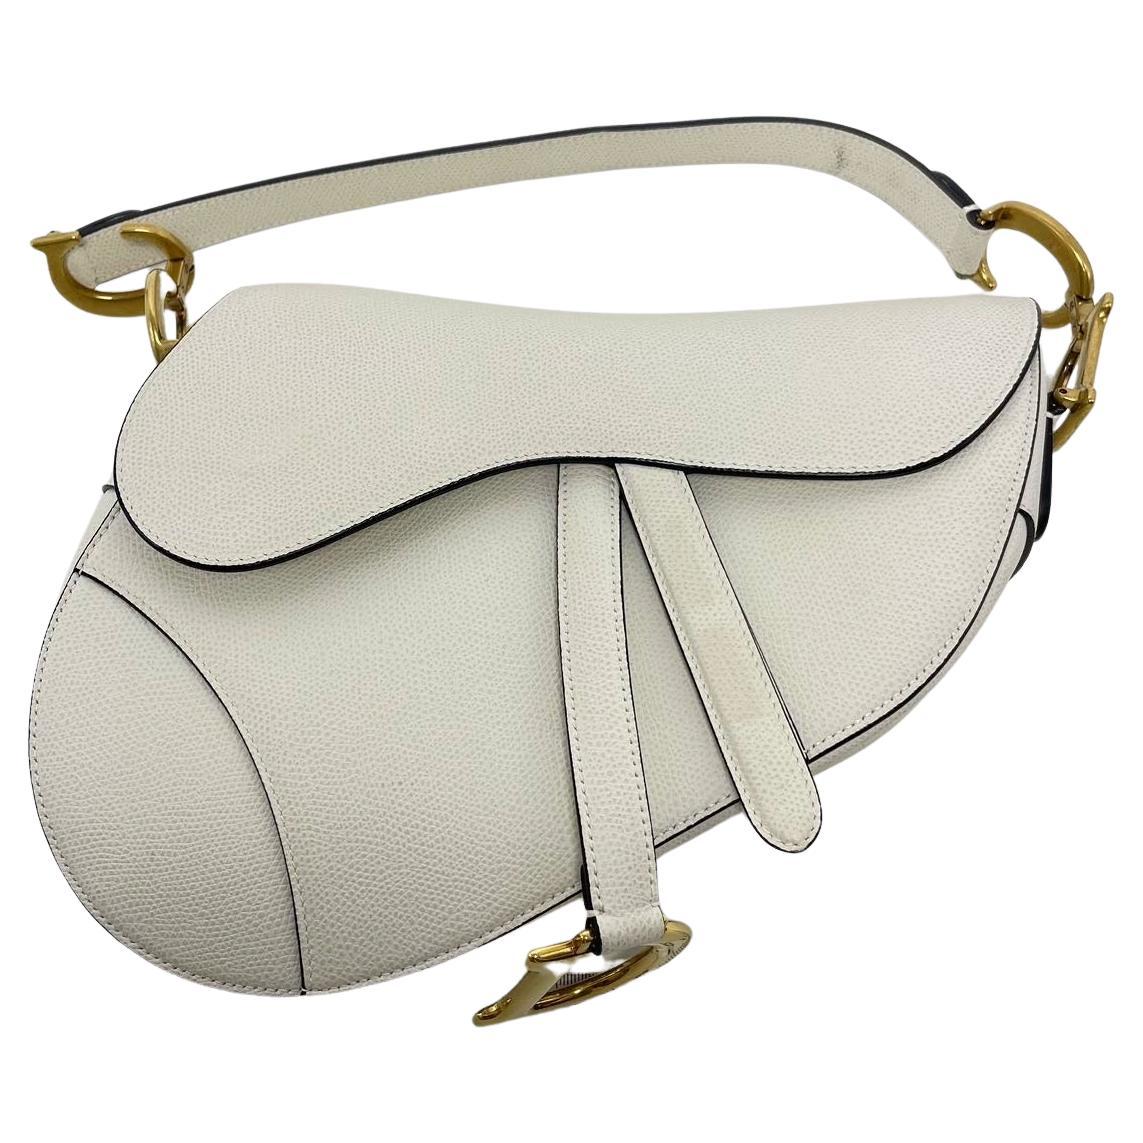 Dior Saddle White Medium Grained Leather Handbag For Sale